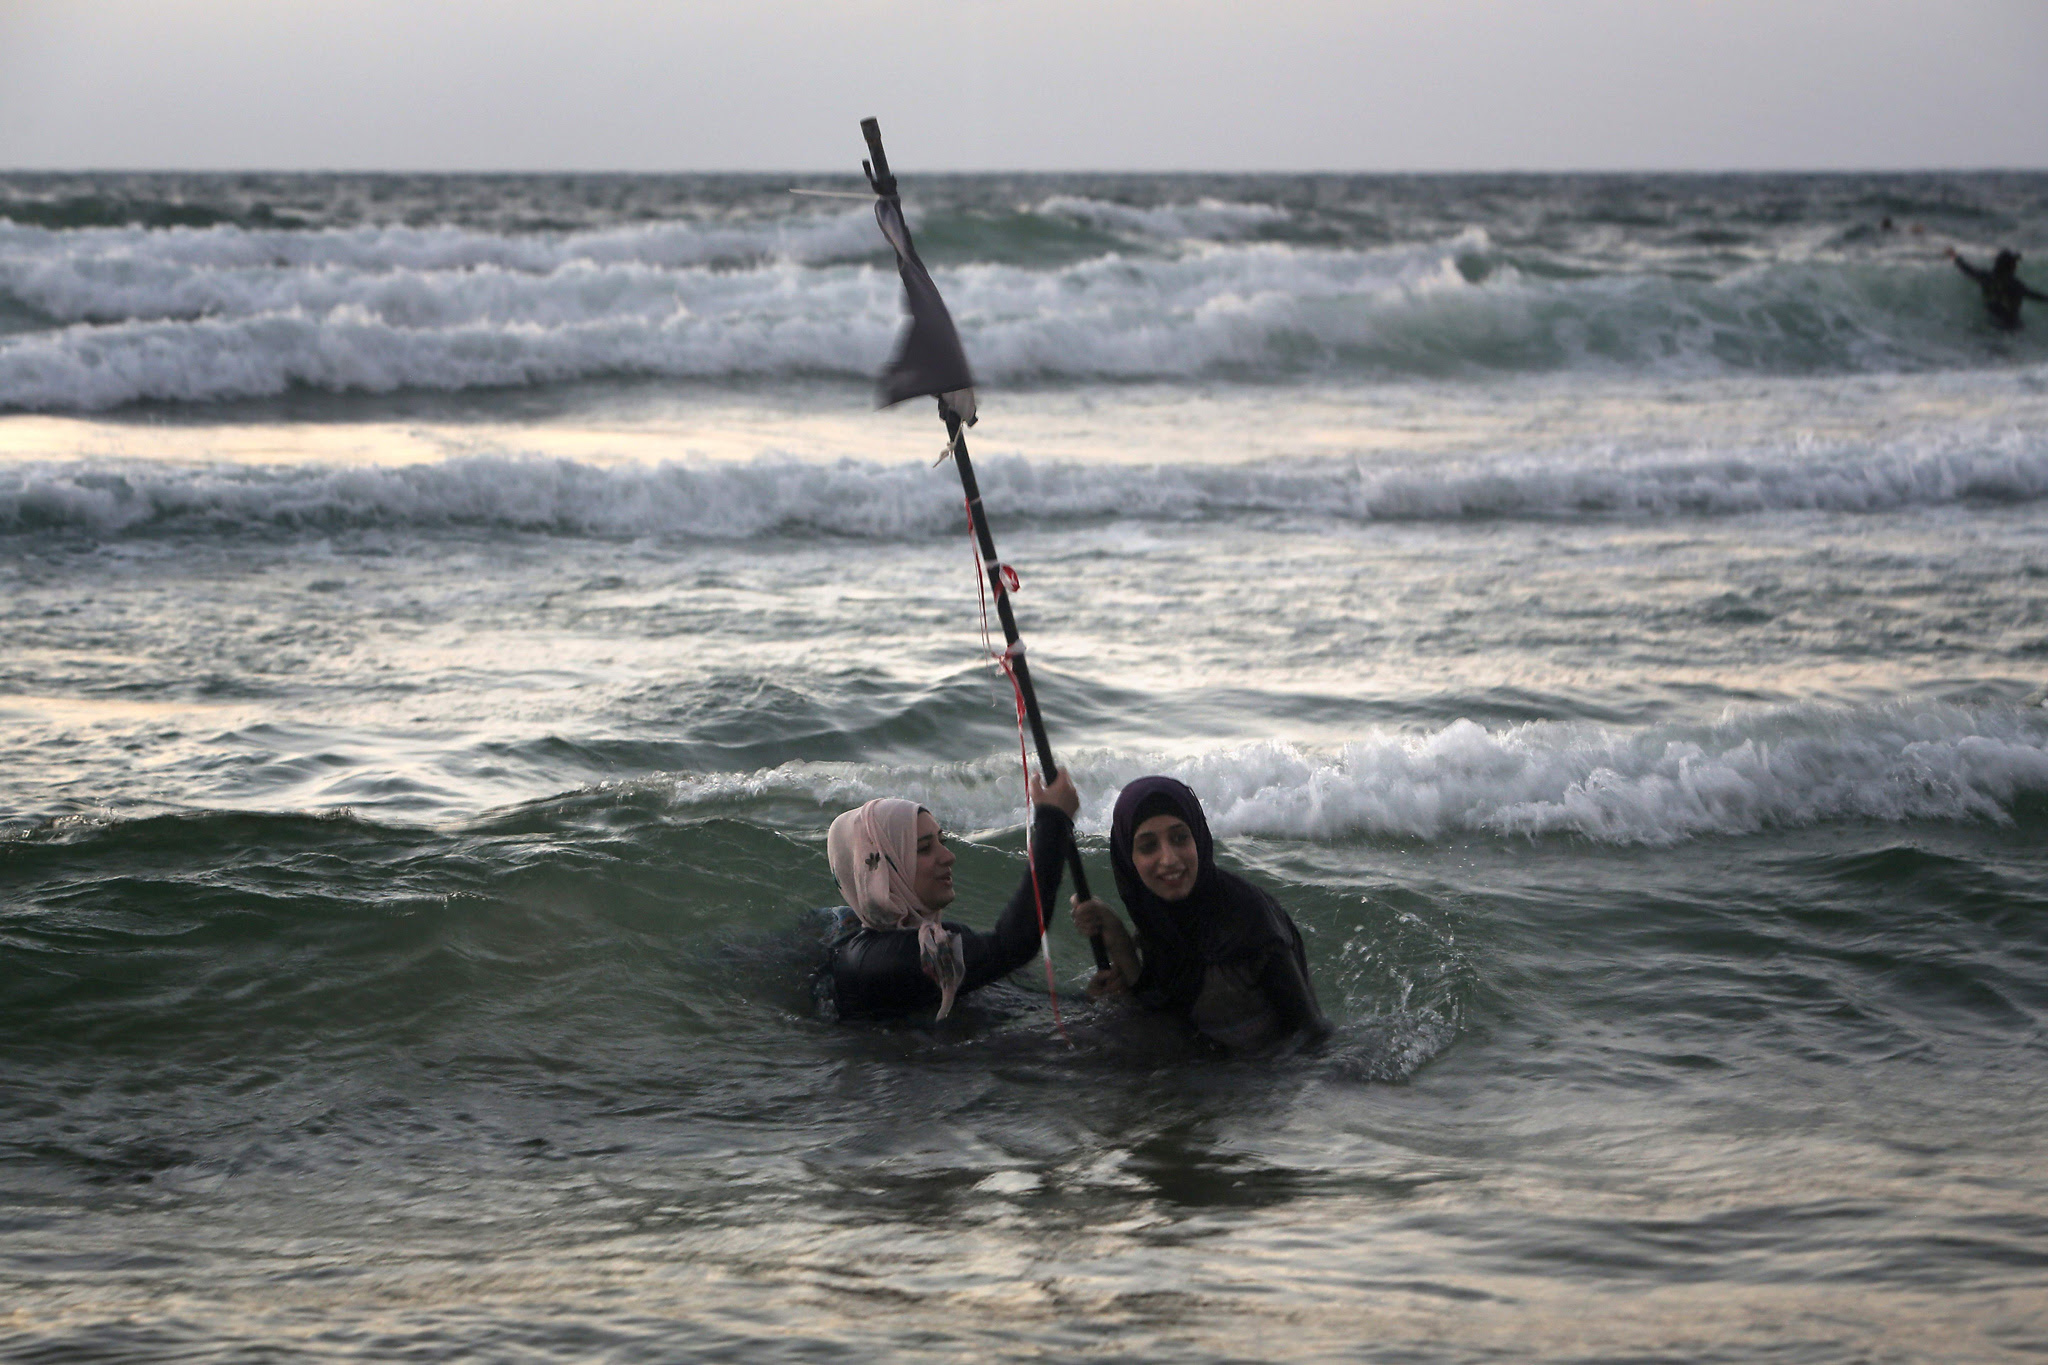 Palestinian women swim in the Mediterranean sea on the beach in Tel Aviv during the Eid al-Adha holiday